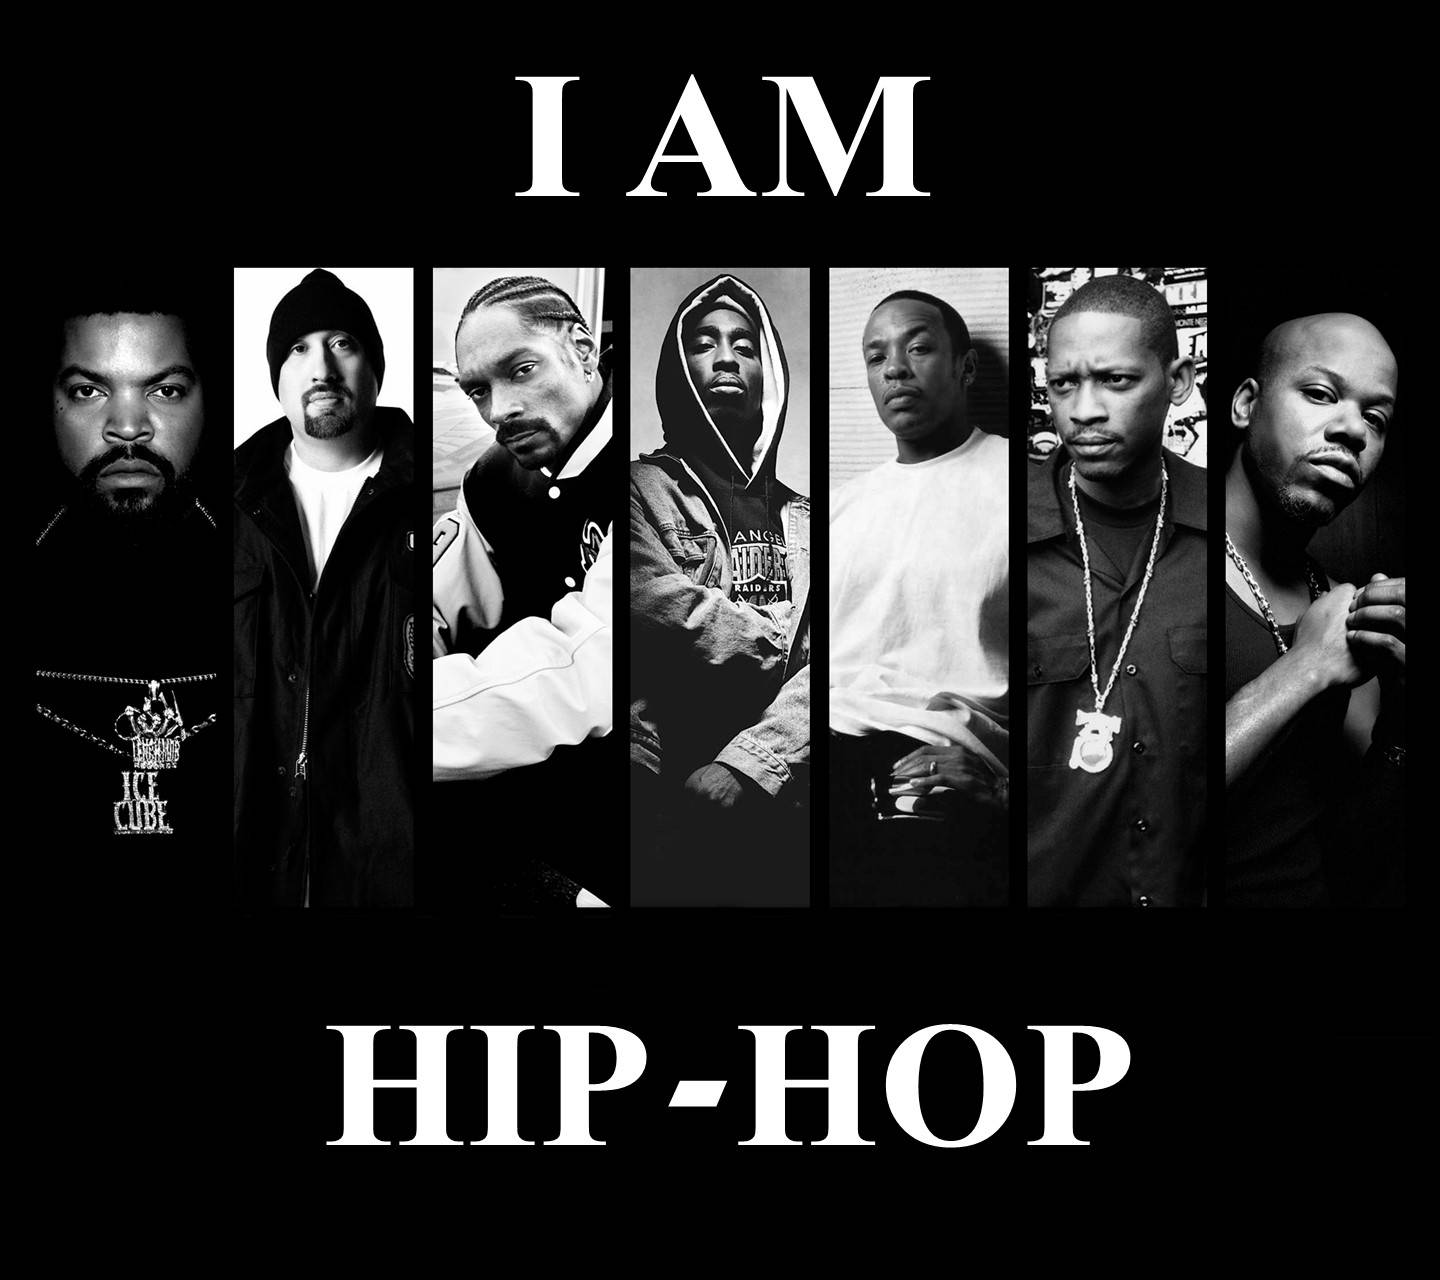 I AM Hip Hop Wallpaper Free I AM Hip Hop Background